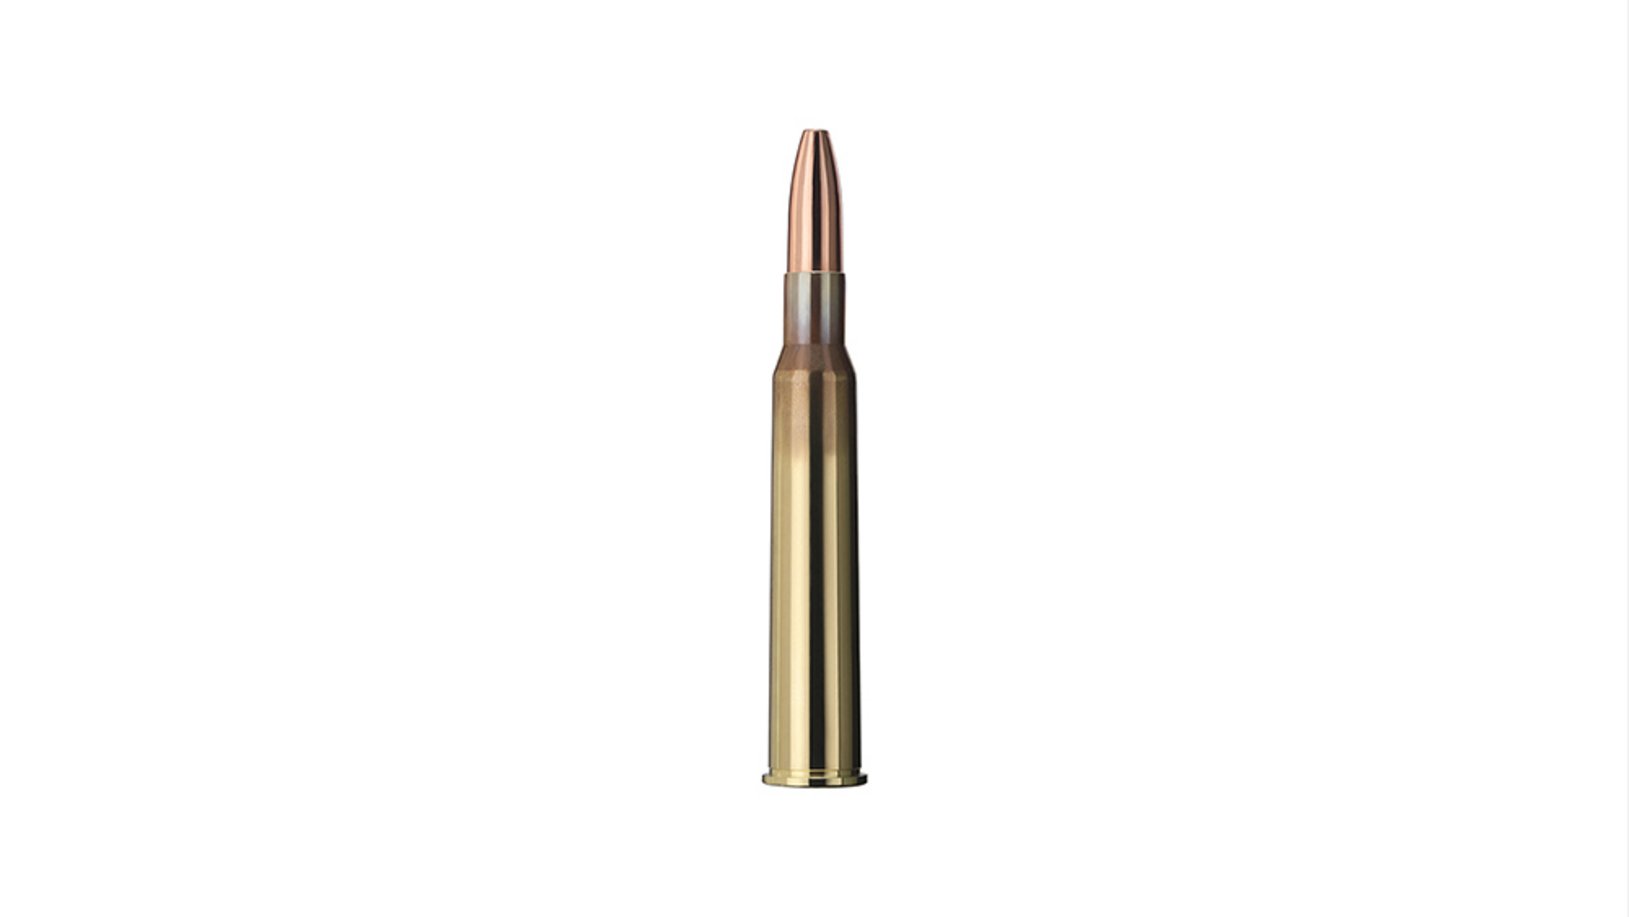 Single bullet view of GECO 7x65 R PLUS 8,2g